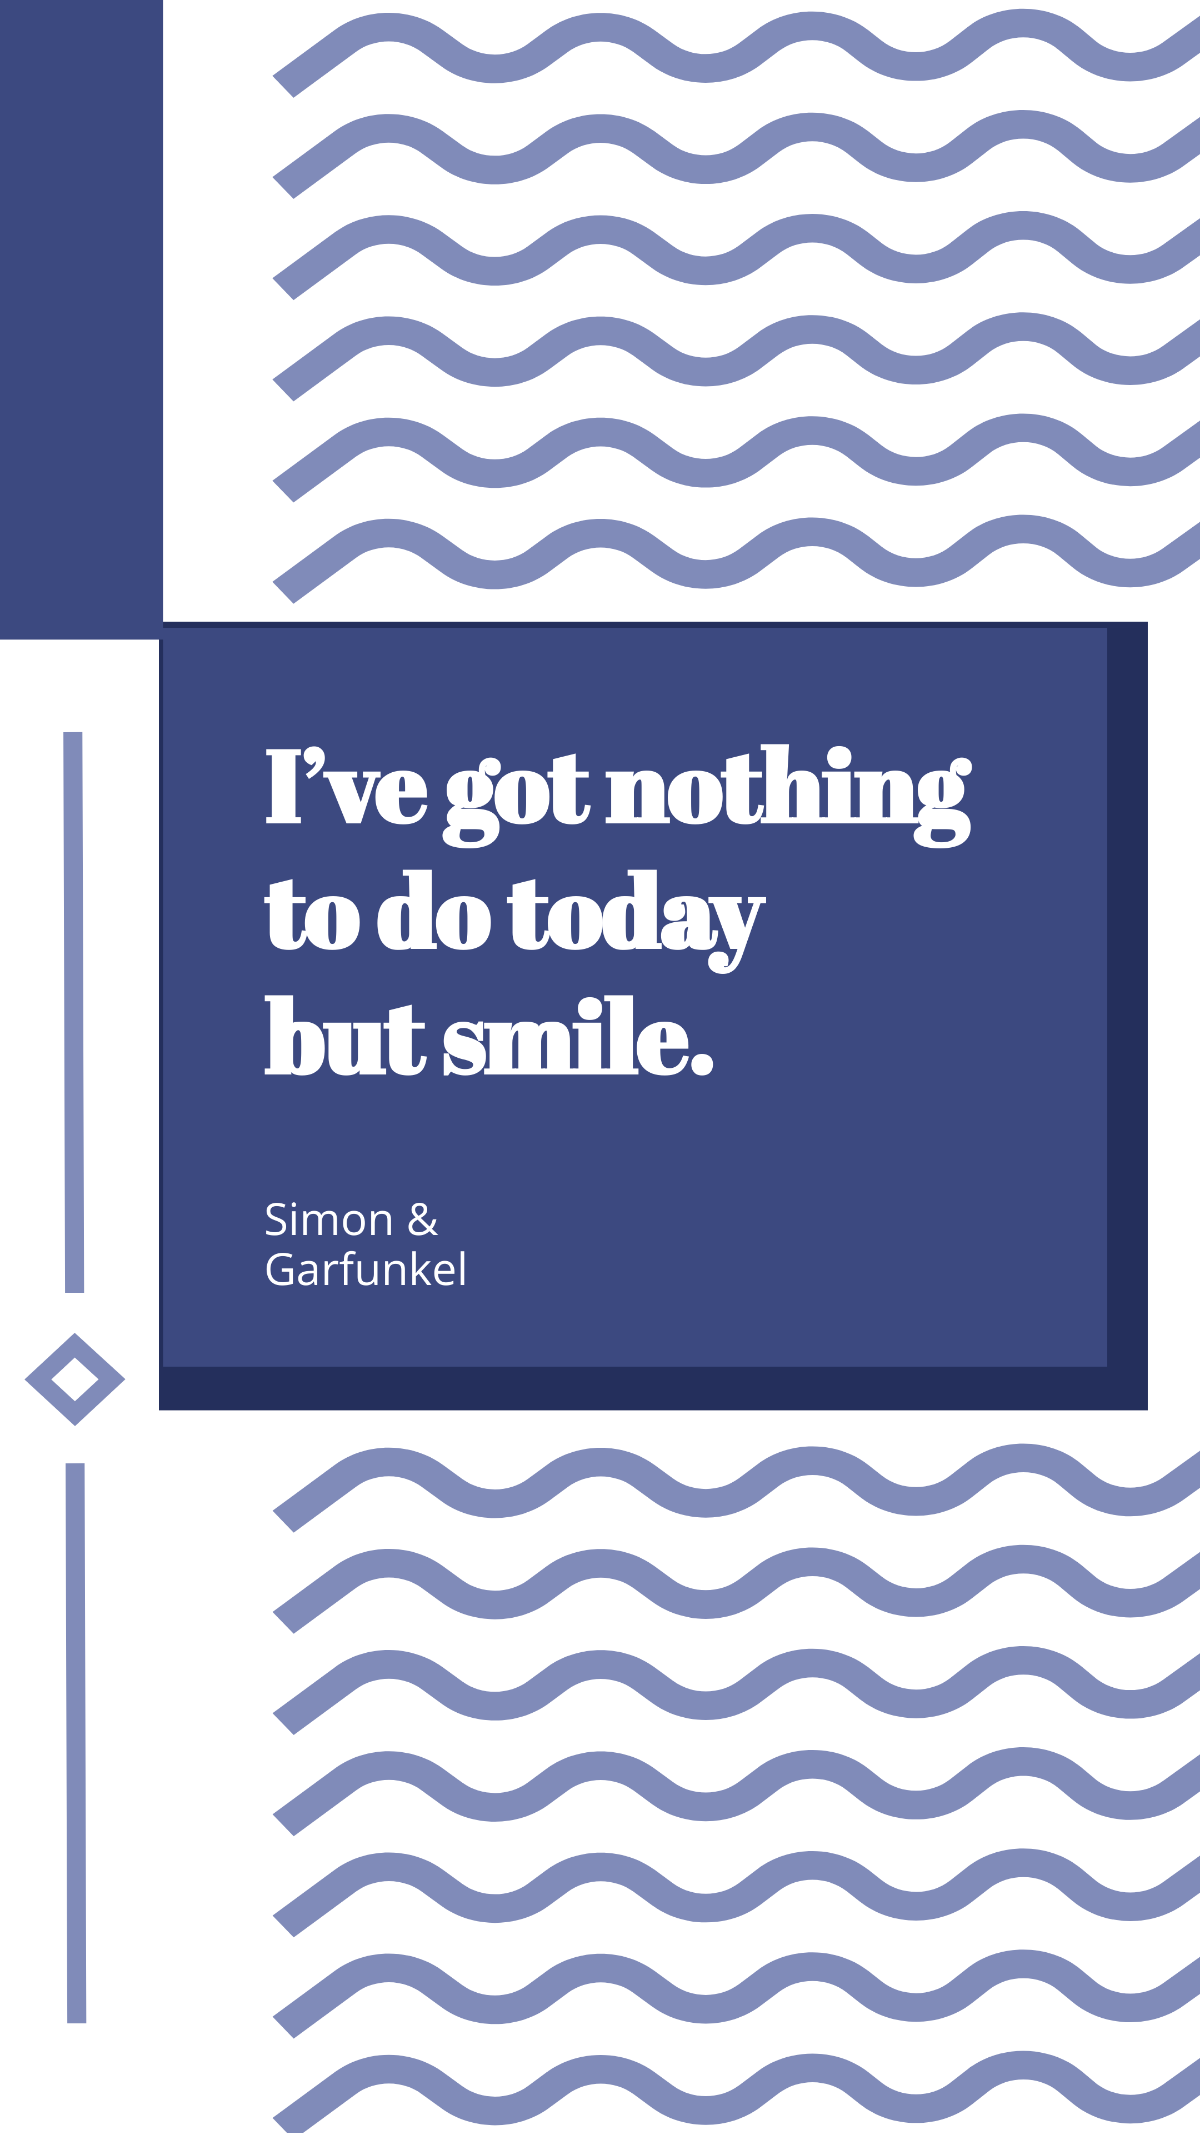 Simon & Garfunkel - I’ve got nothing to do today but smile. Template